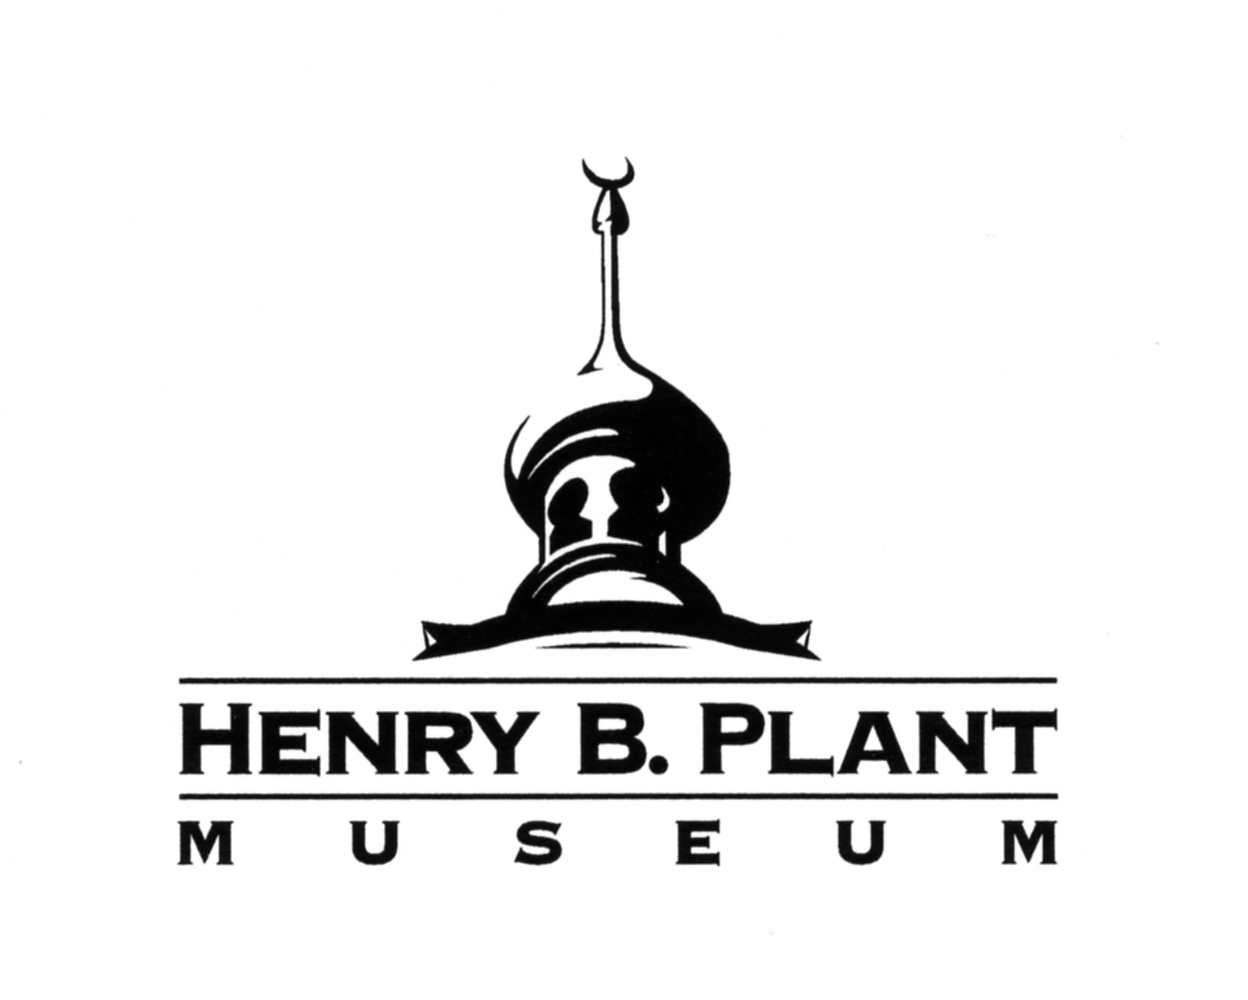 Henry B. Plant Museum